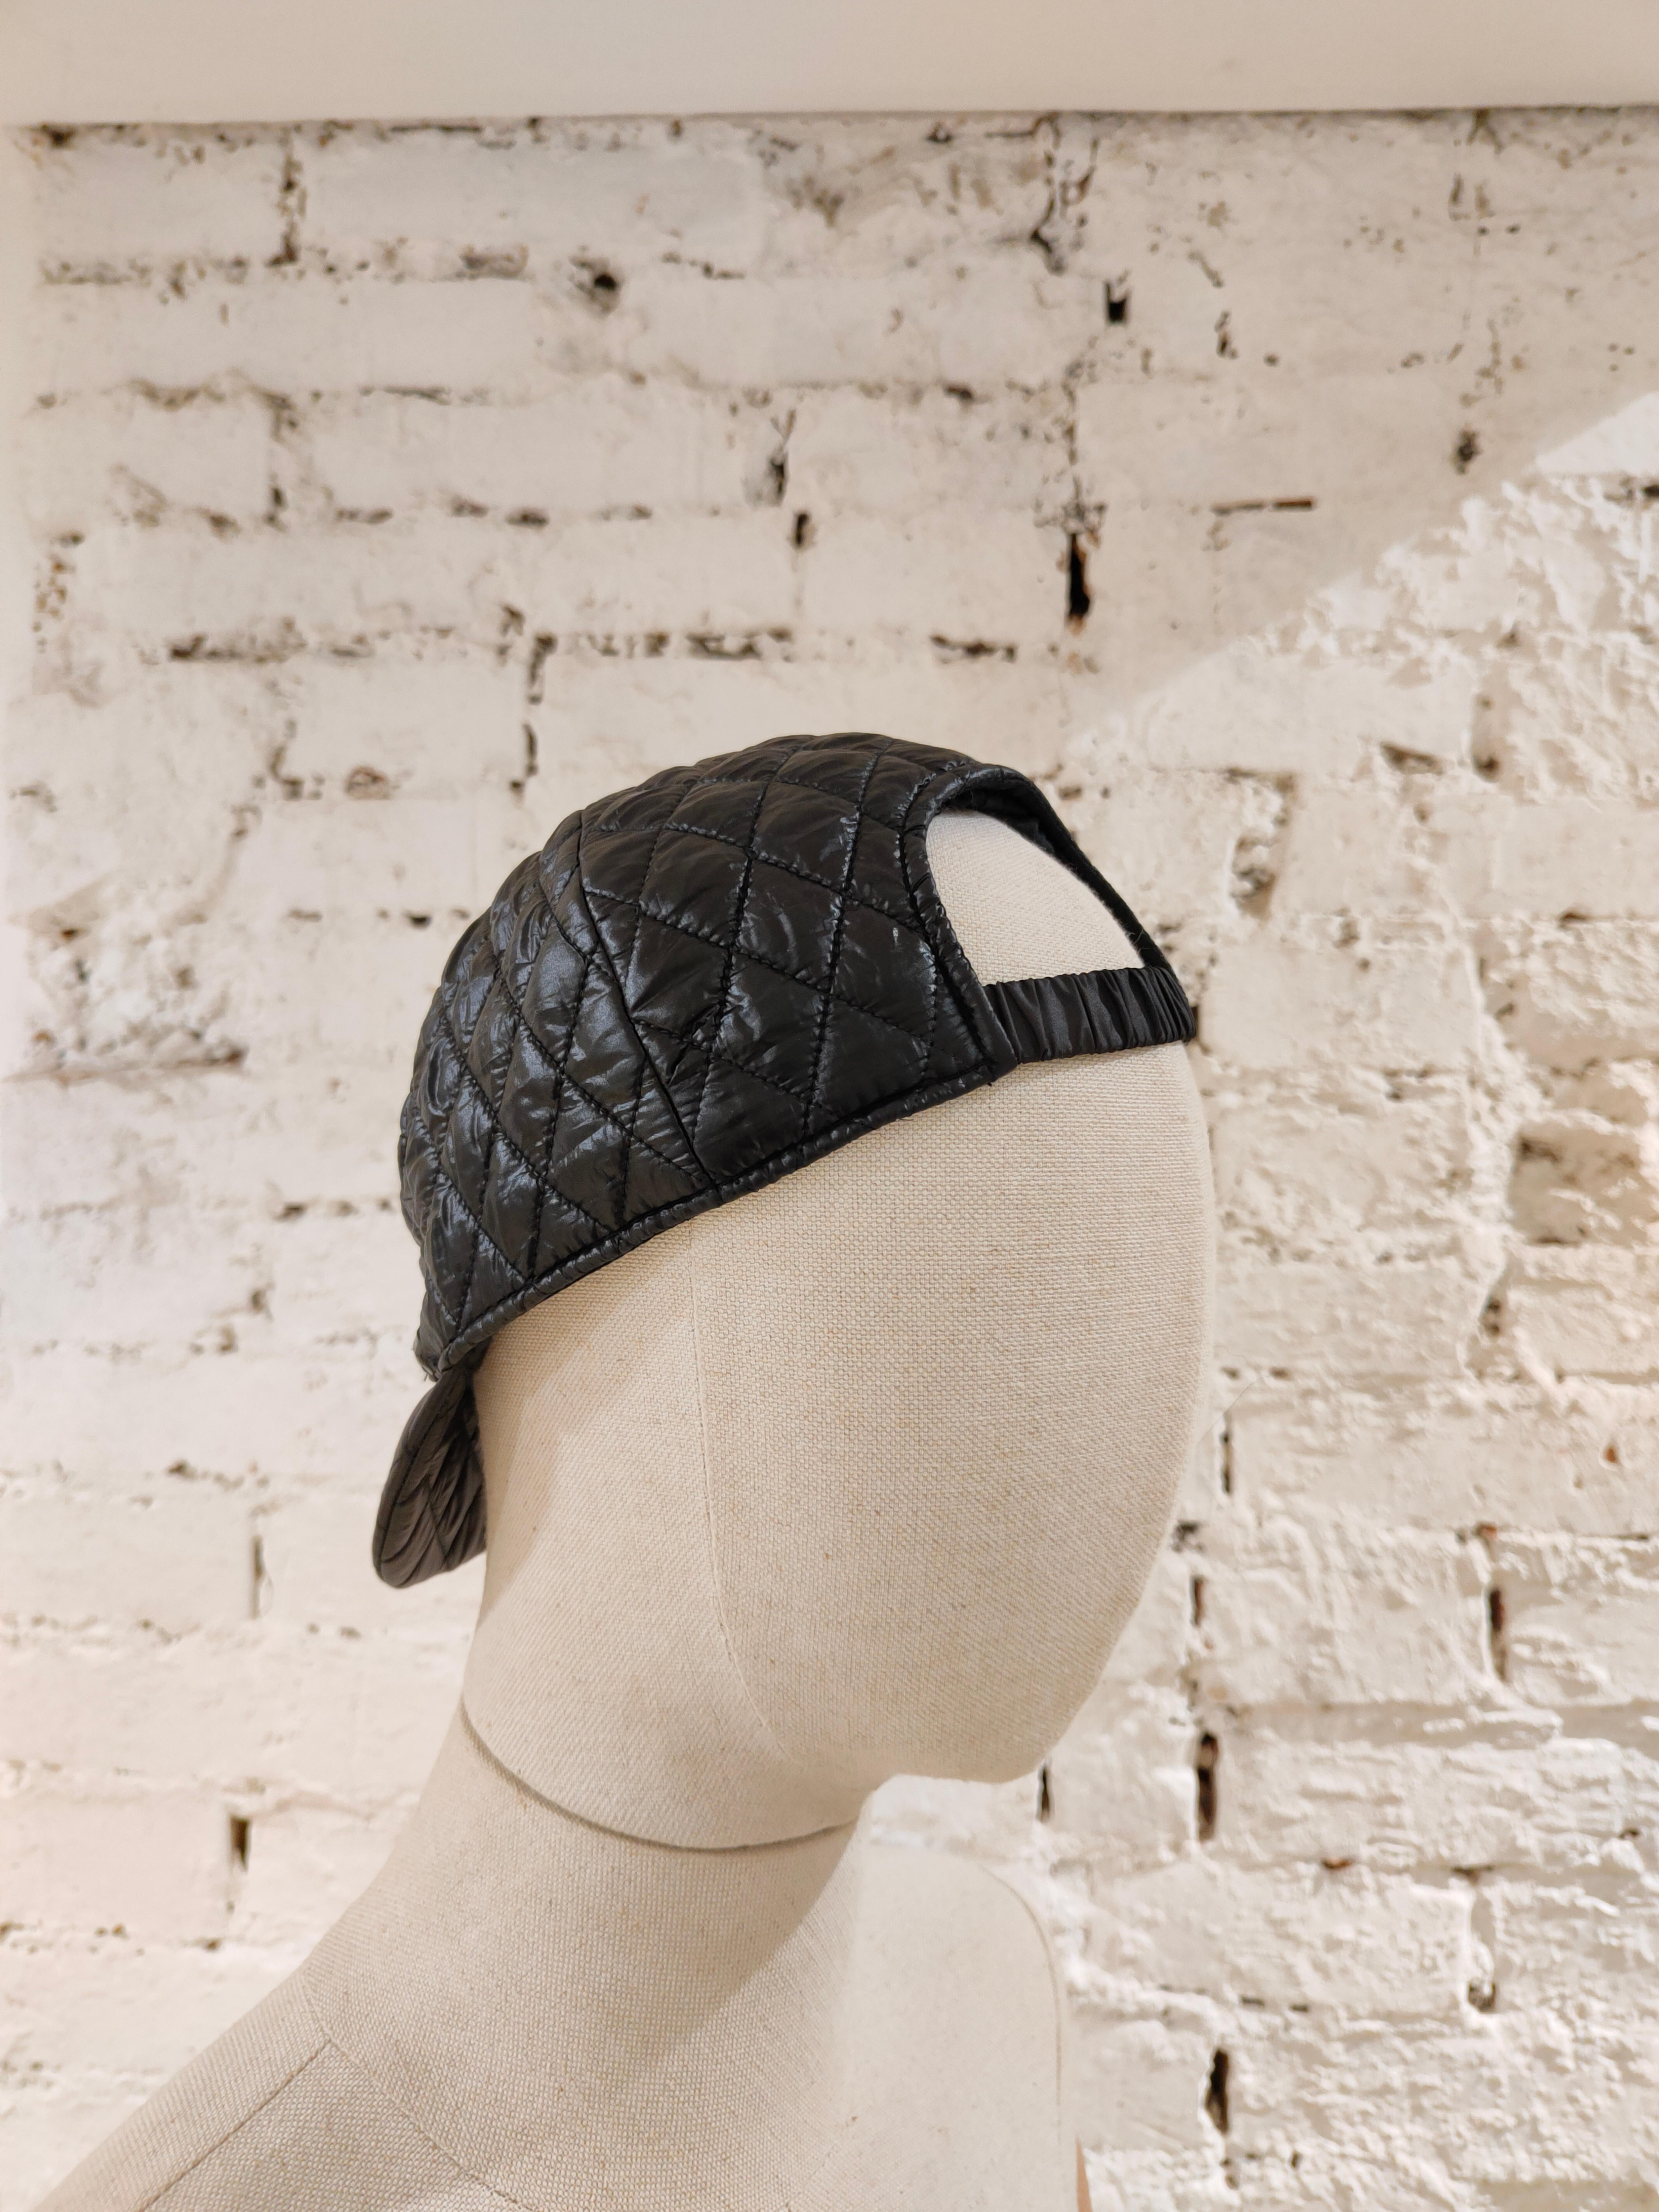 Women's Borsalino black leather hat